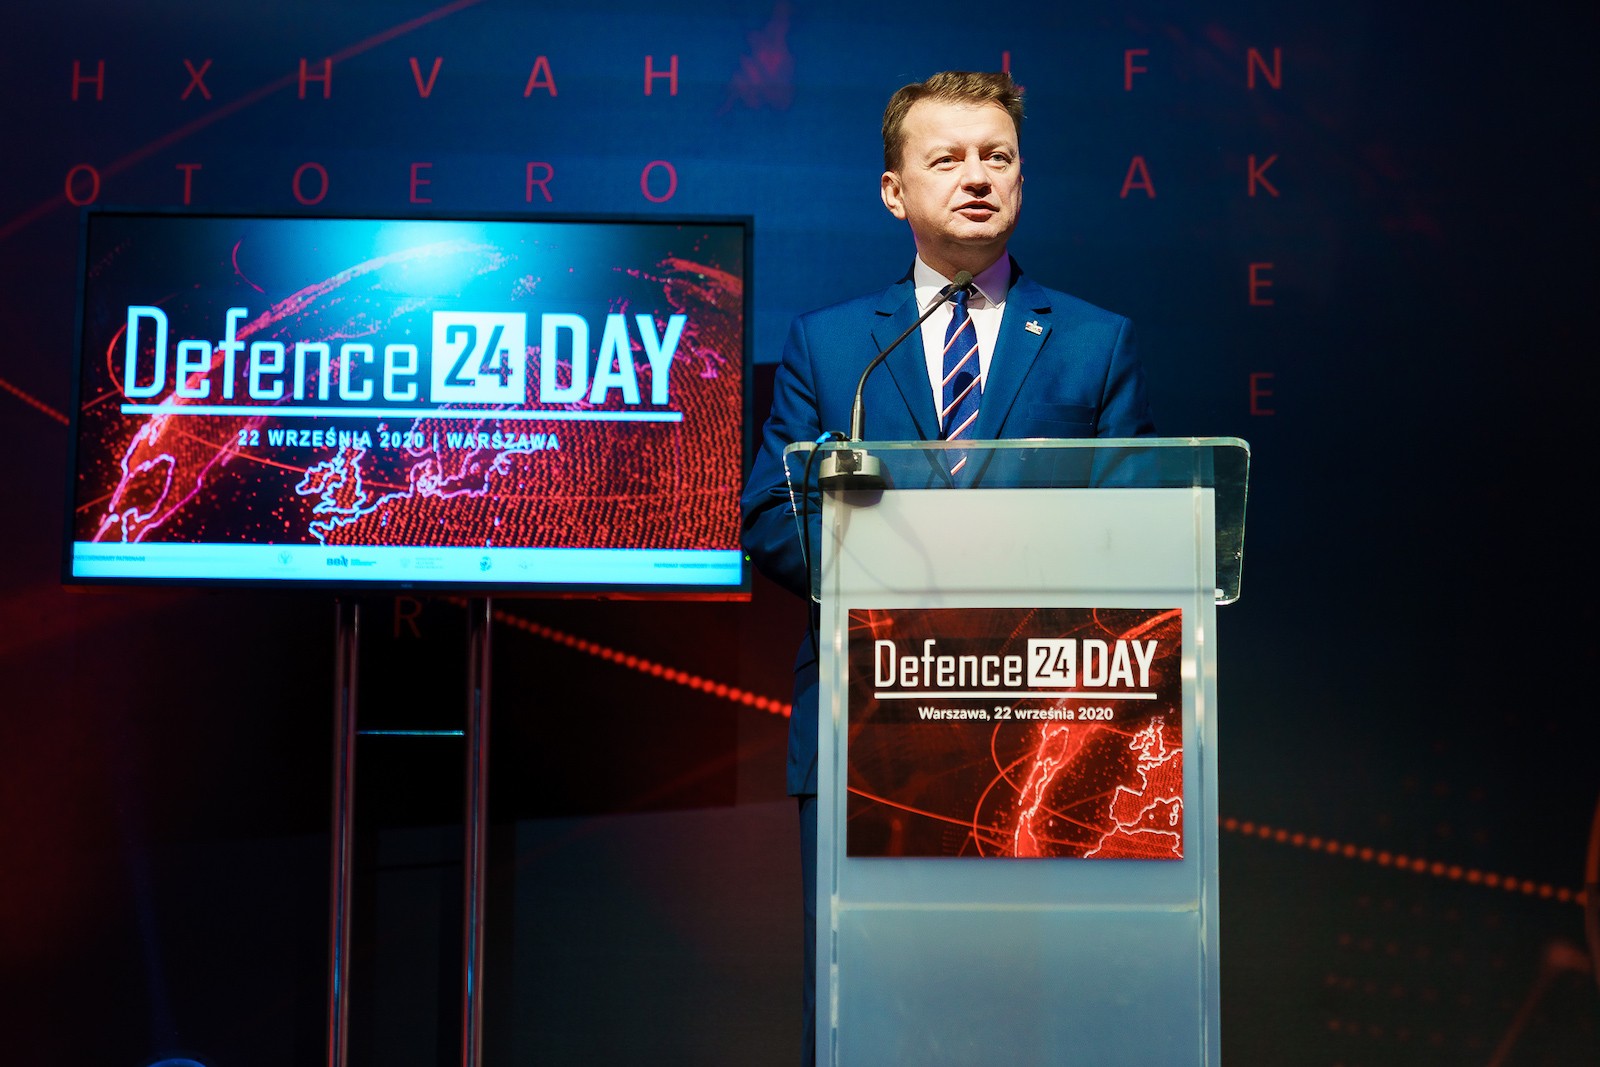 Fot. Kreatyw Media/Defence24.pl